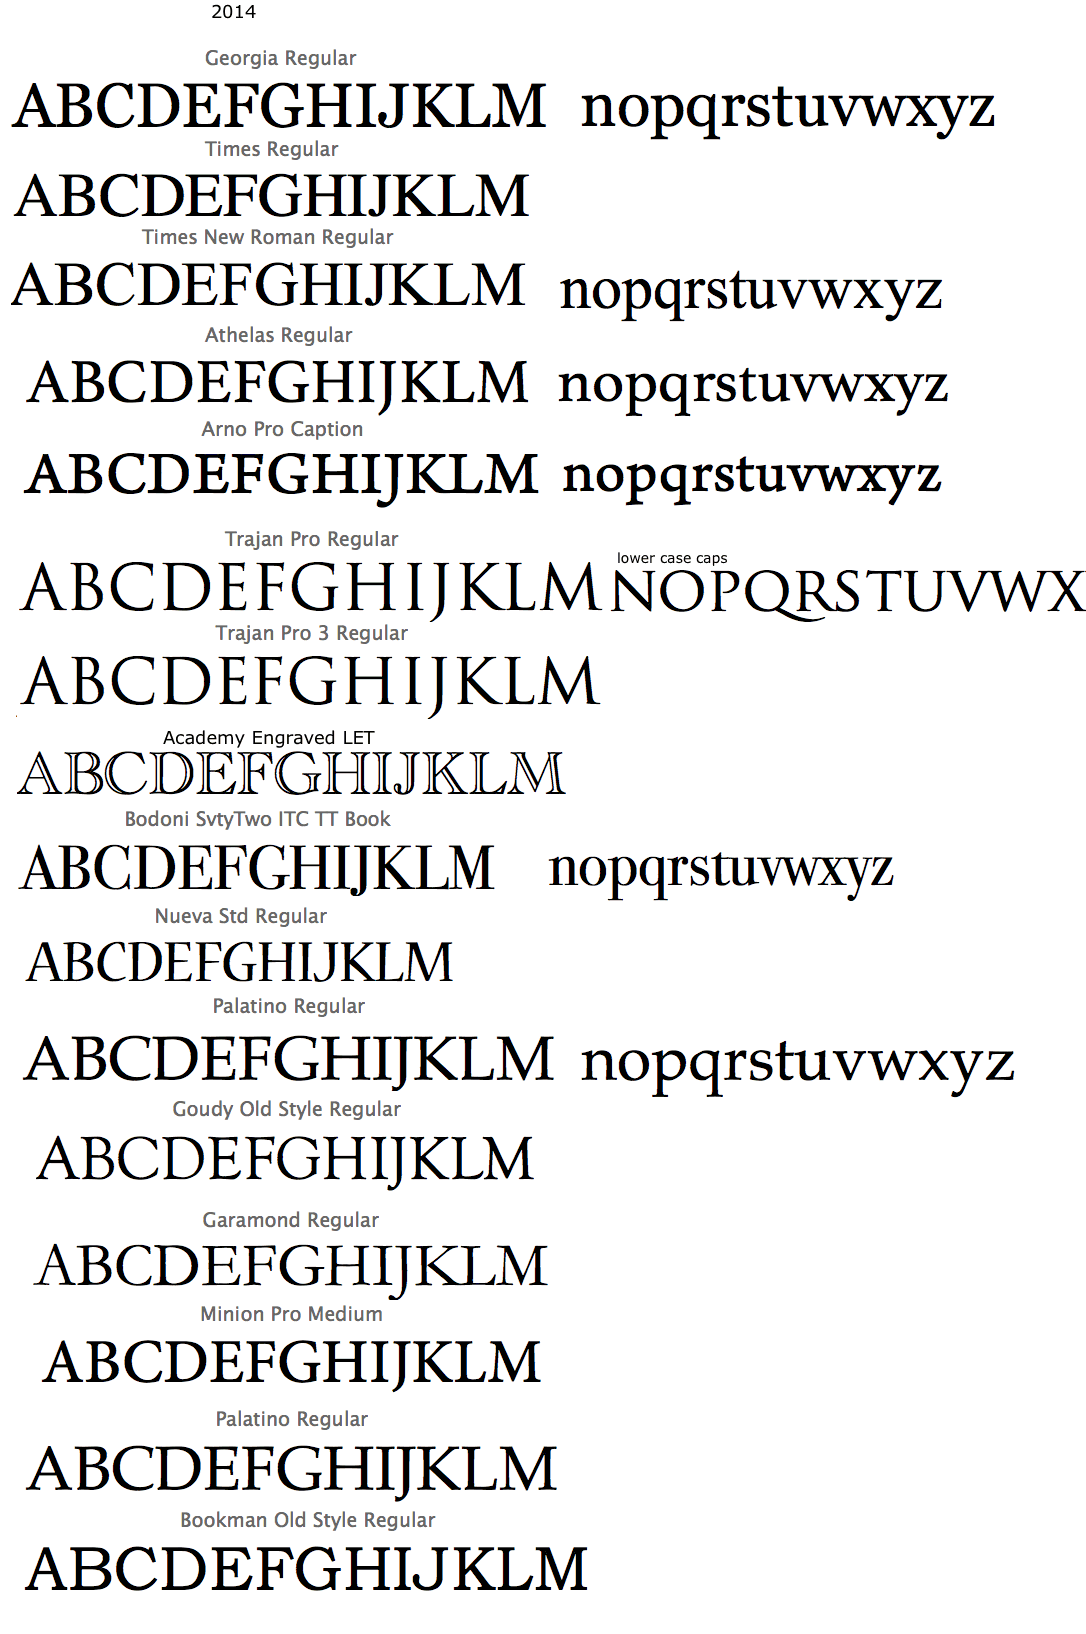 gurmukhi font chrome extension